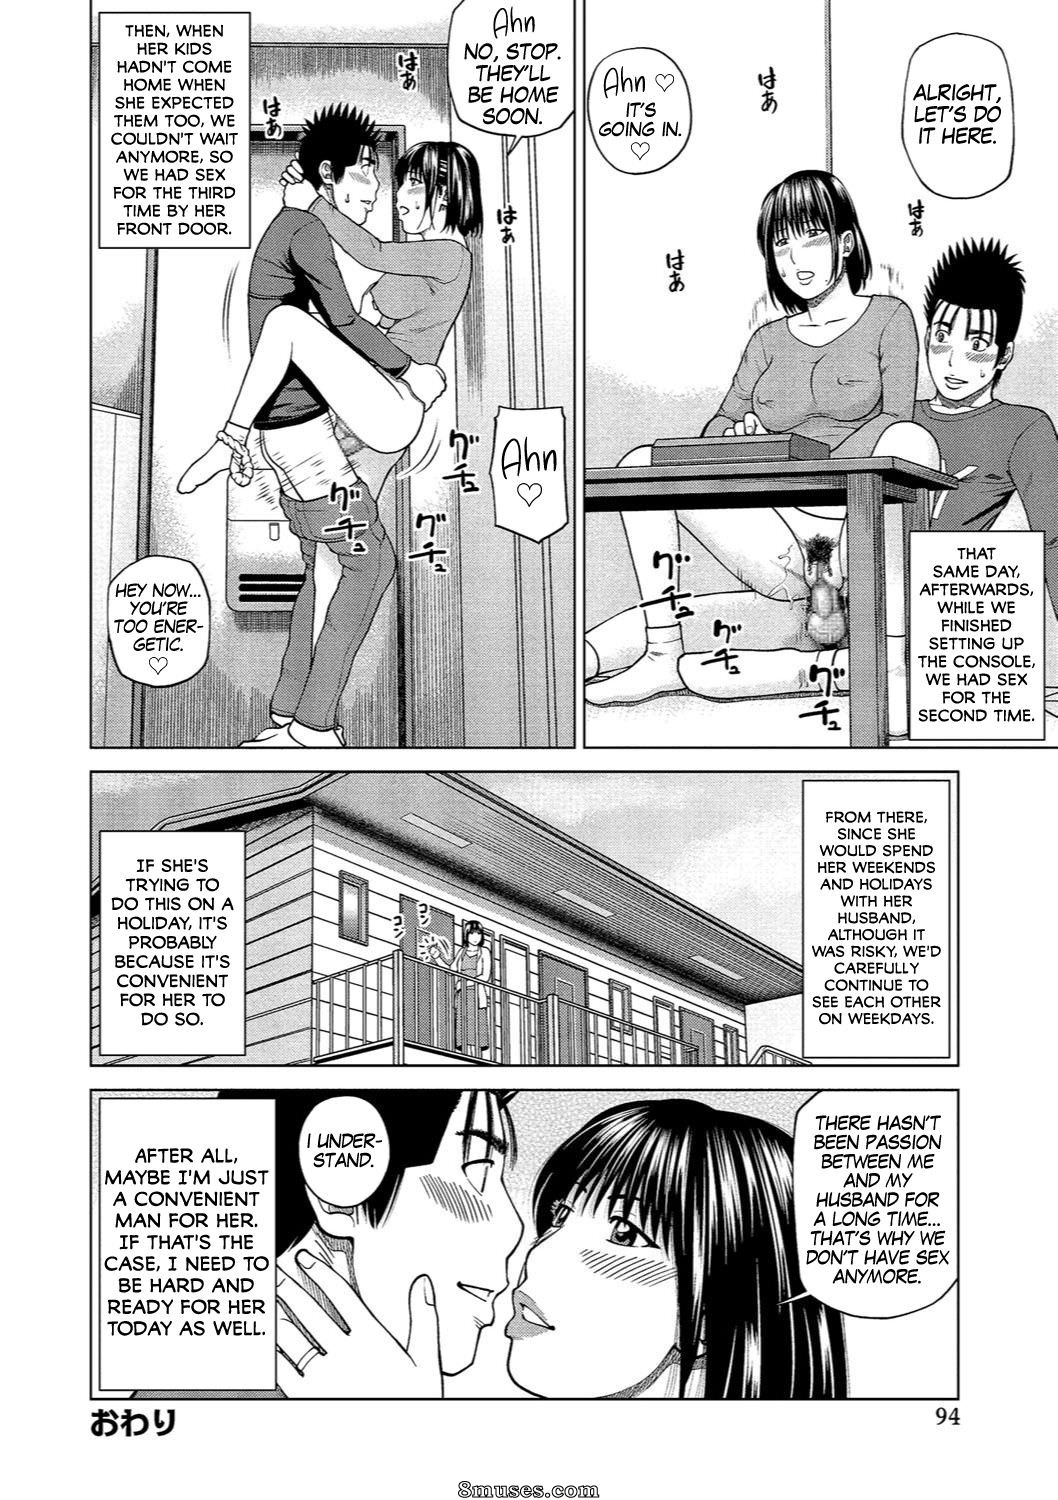 Page 89 Hentai-and-Manga-English/Kuroki-Hidehiko/37-Year-Old-Want-Shy-Wife 8muses pic pic pic